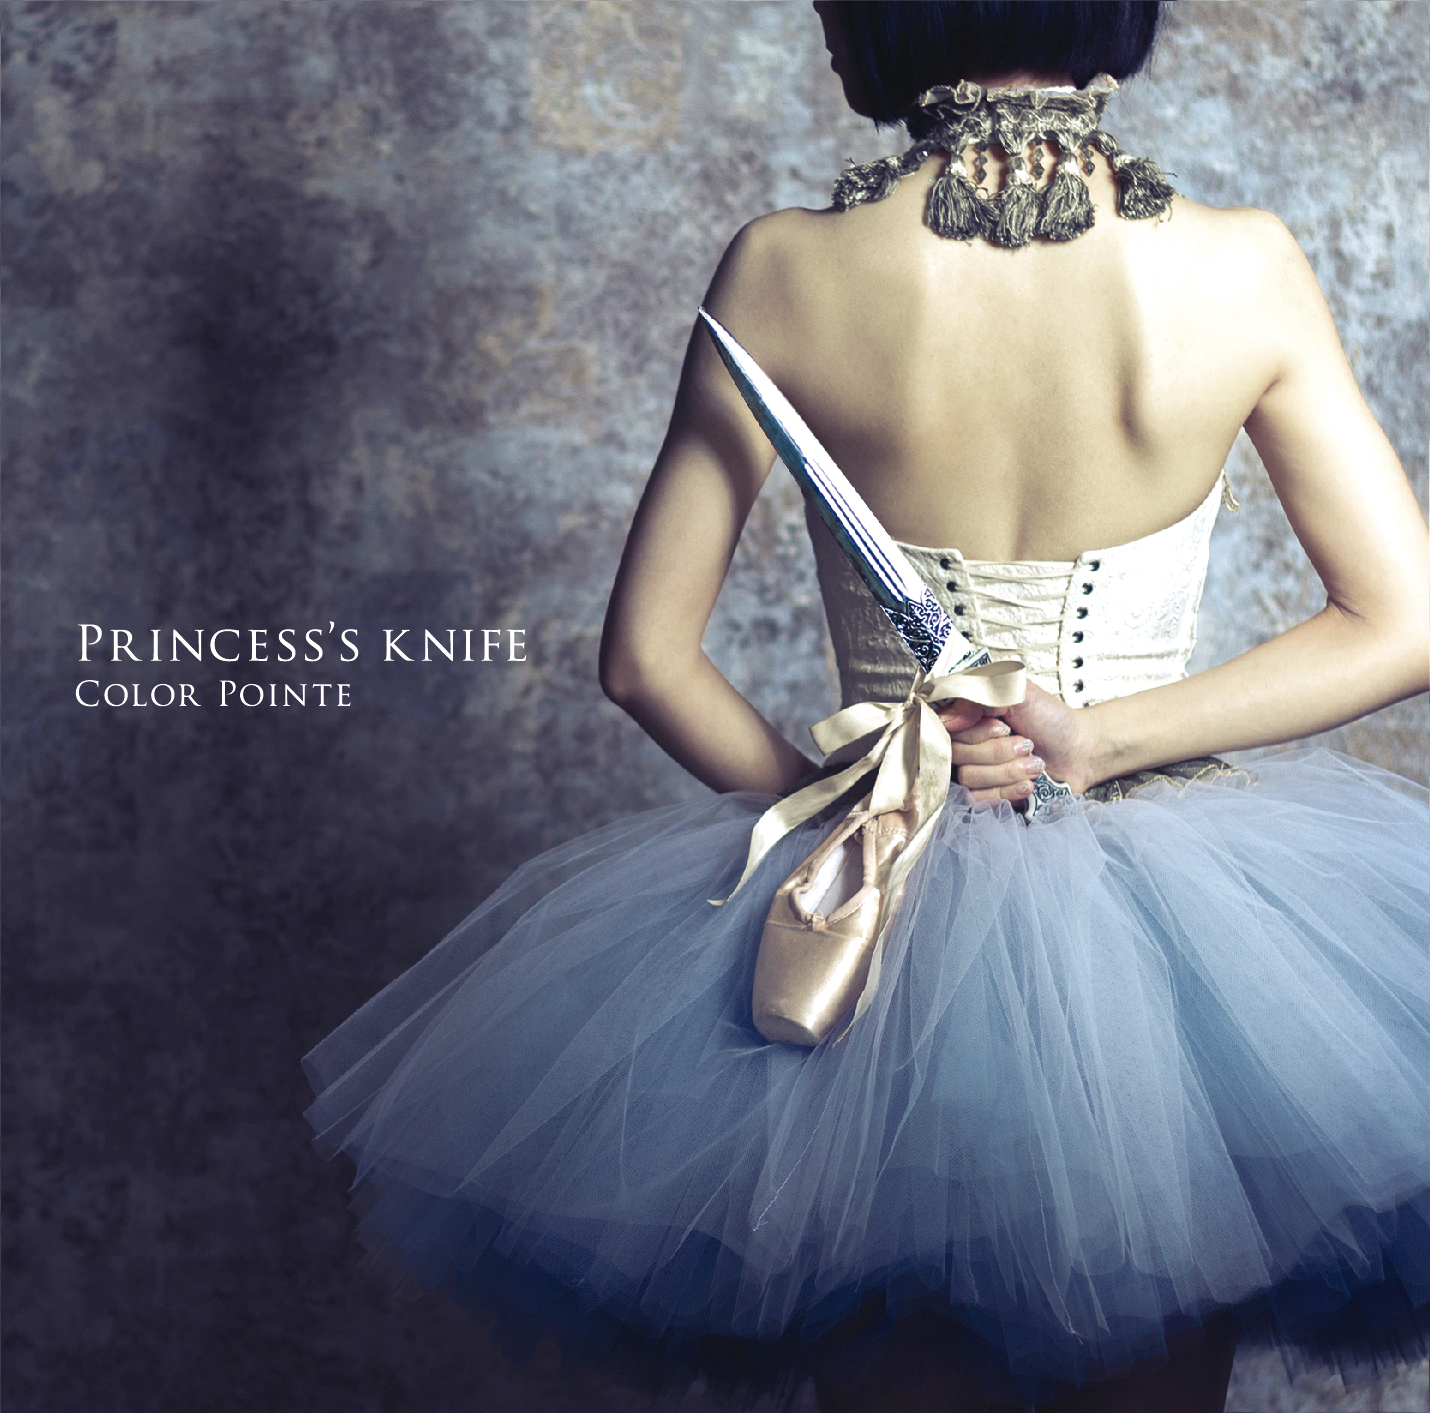 Princess’s knife